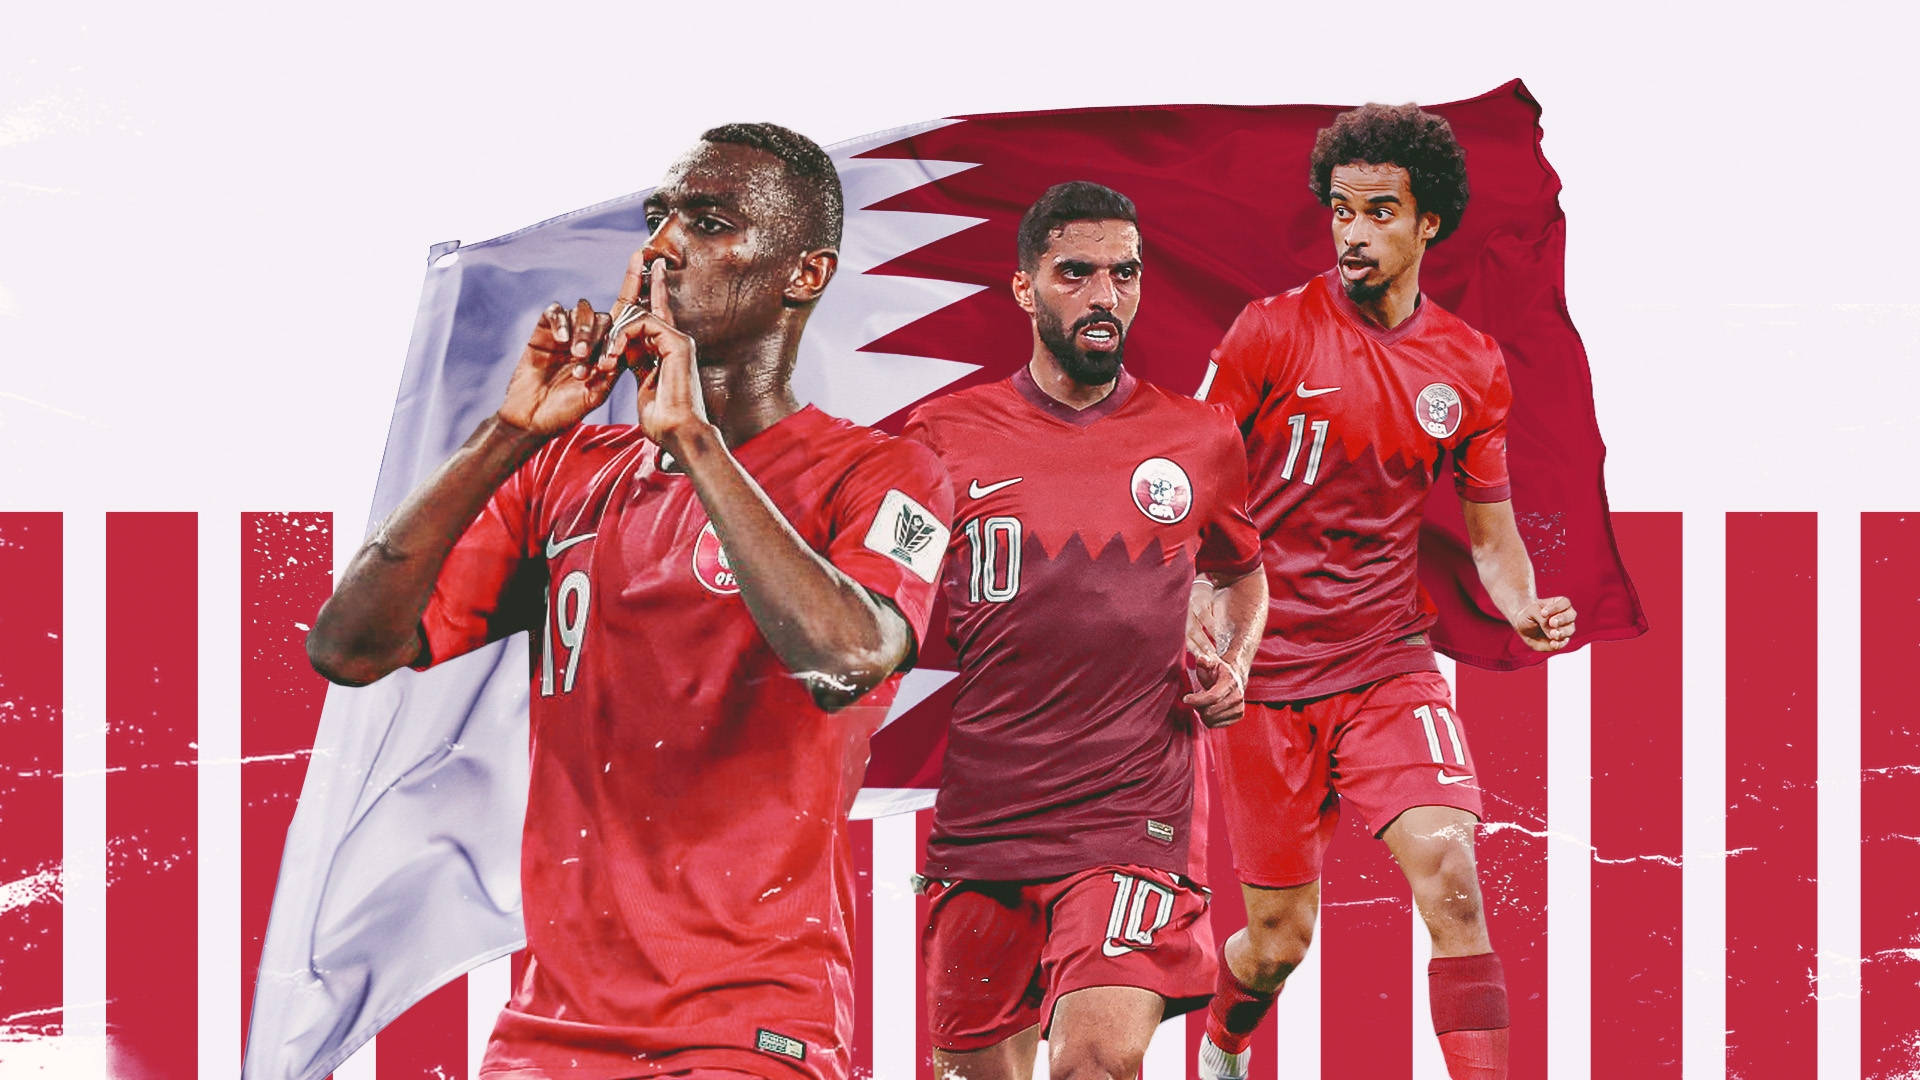 Download Qatar National Football Team With Qatar Flag Wallpaper | Wallpapers .com